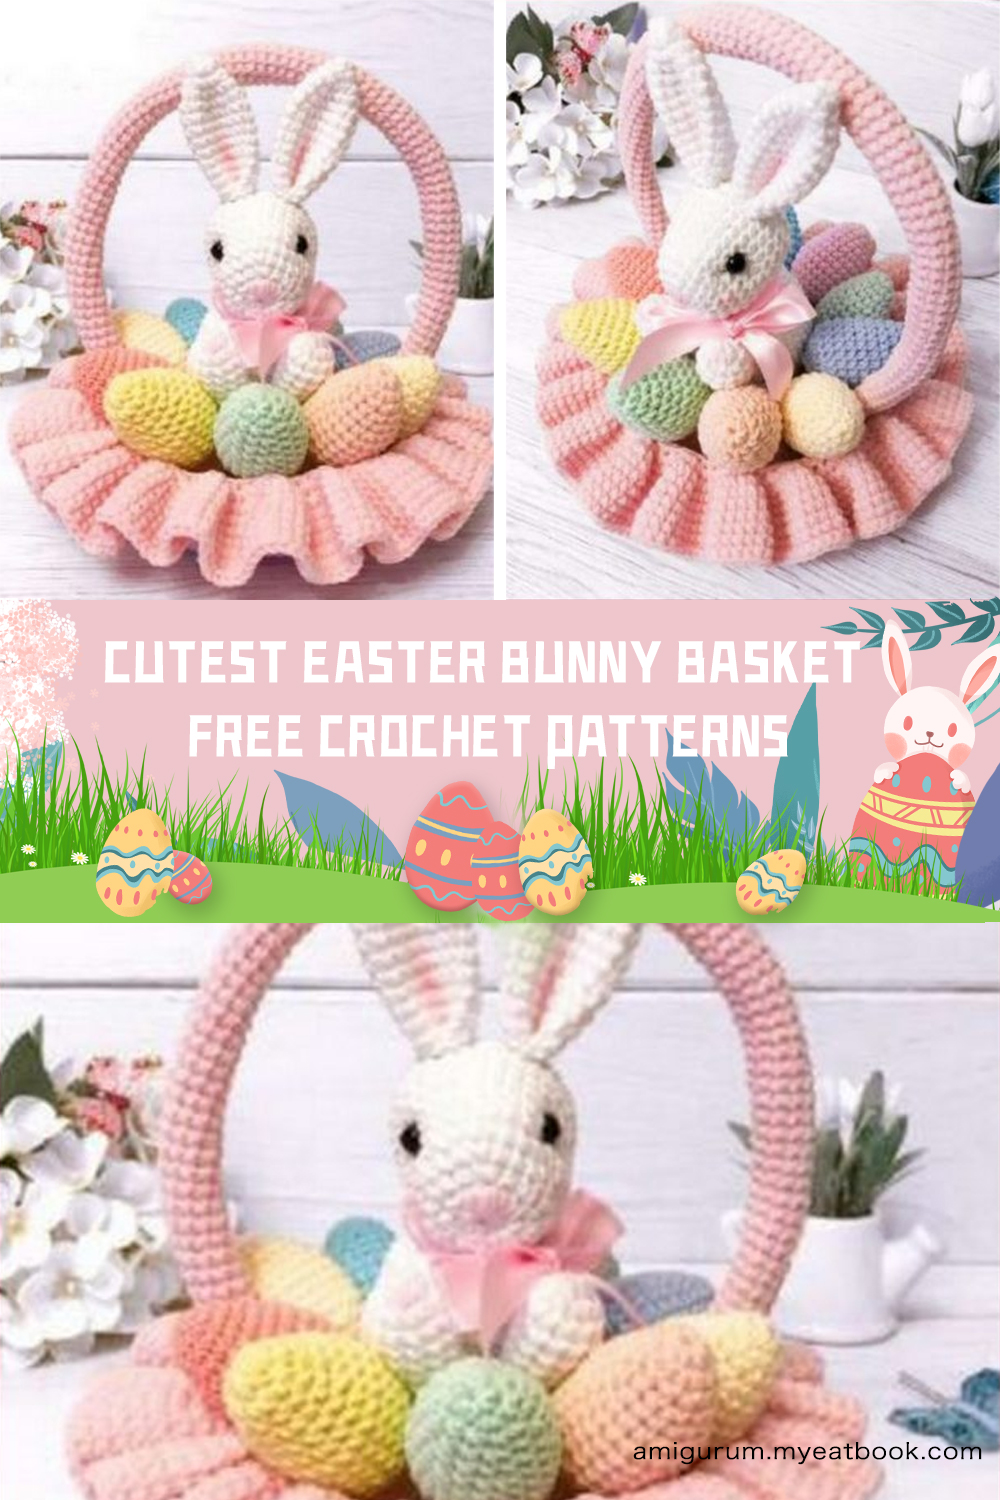 Cutest FREE Easter Crochet Bunny Basket Patterns